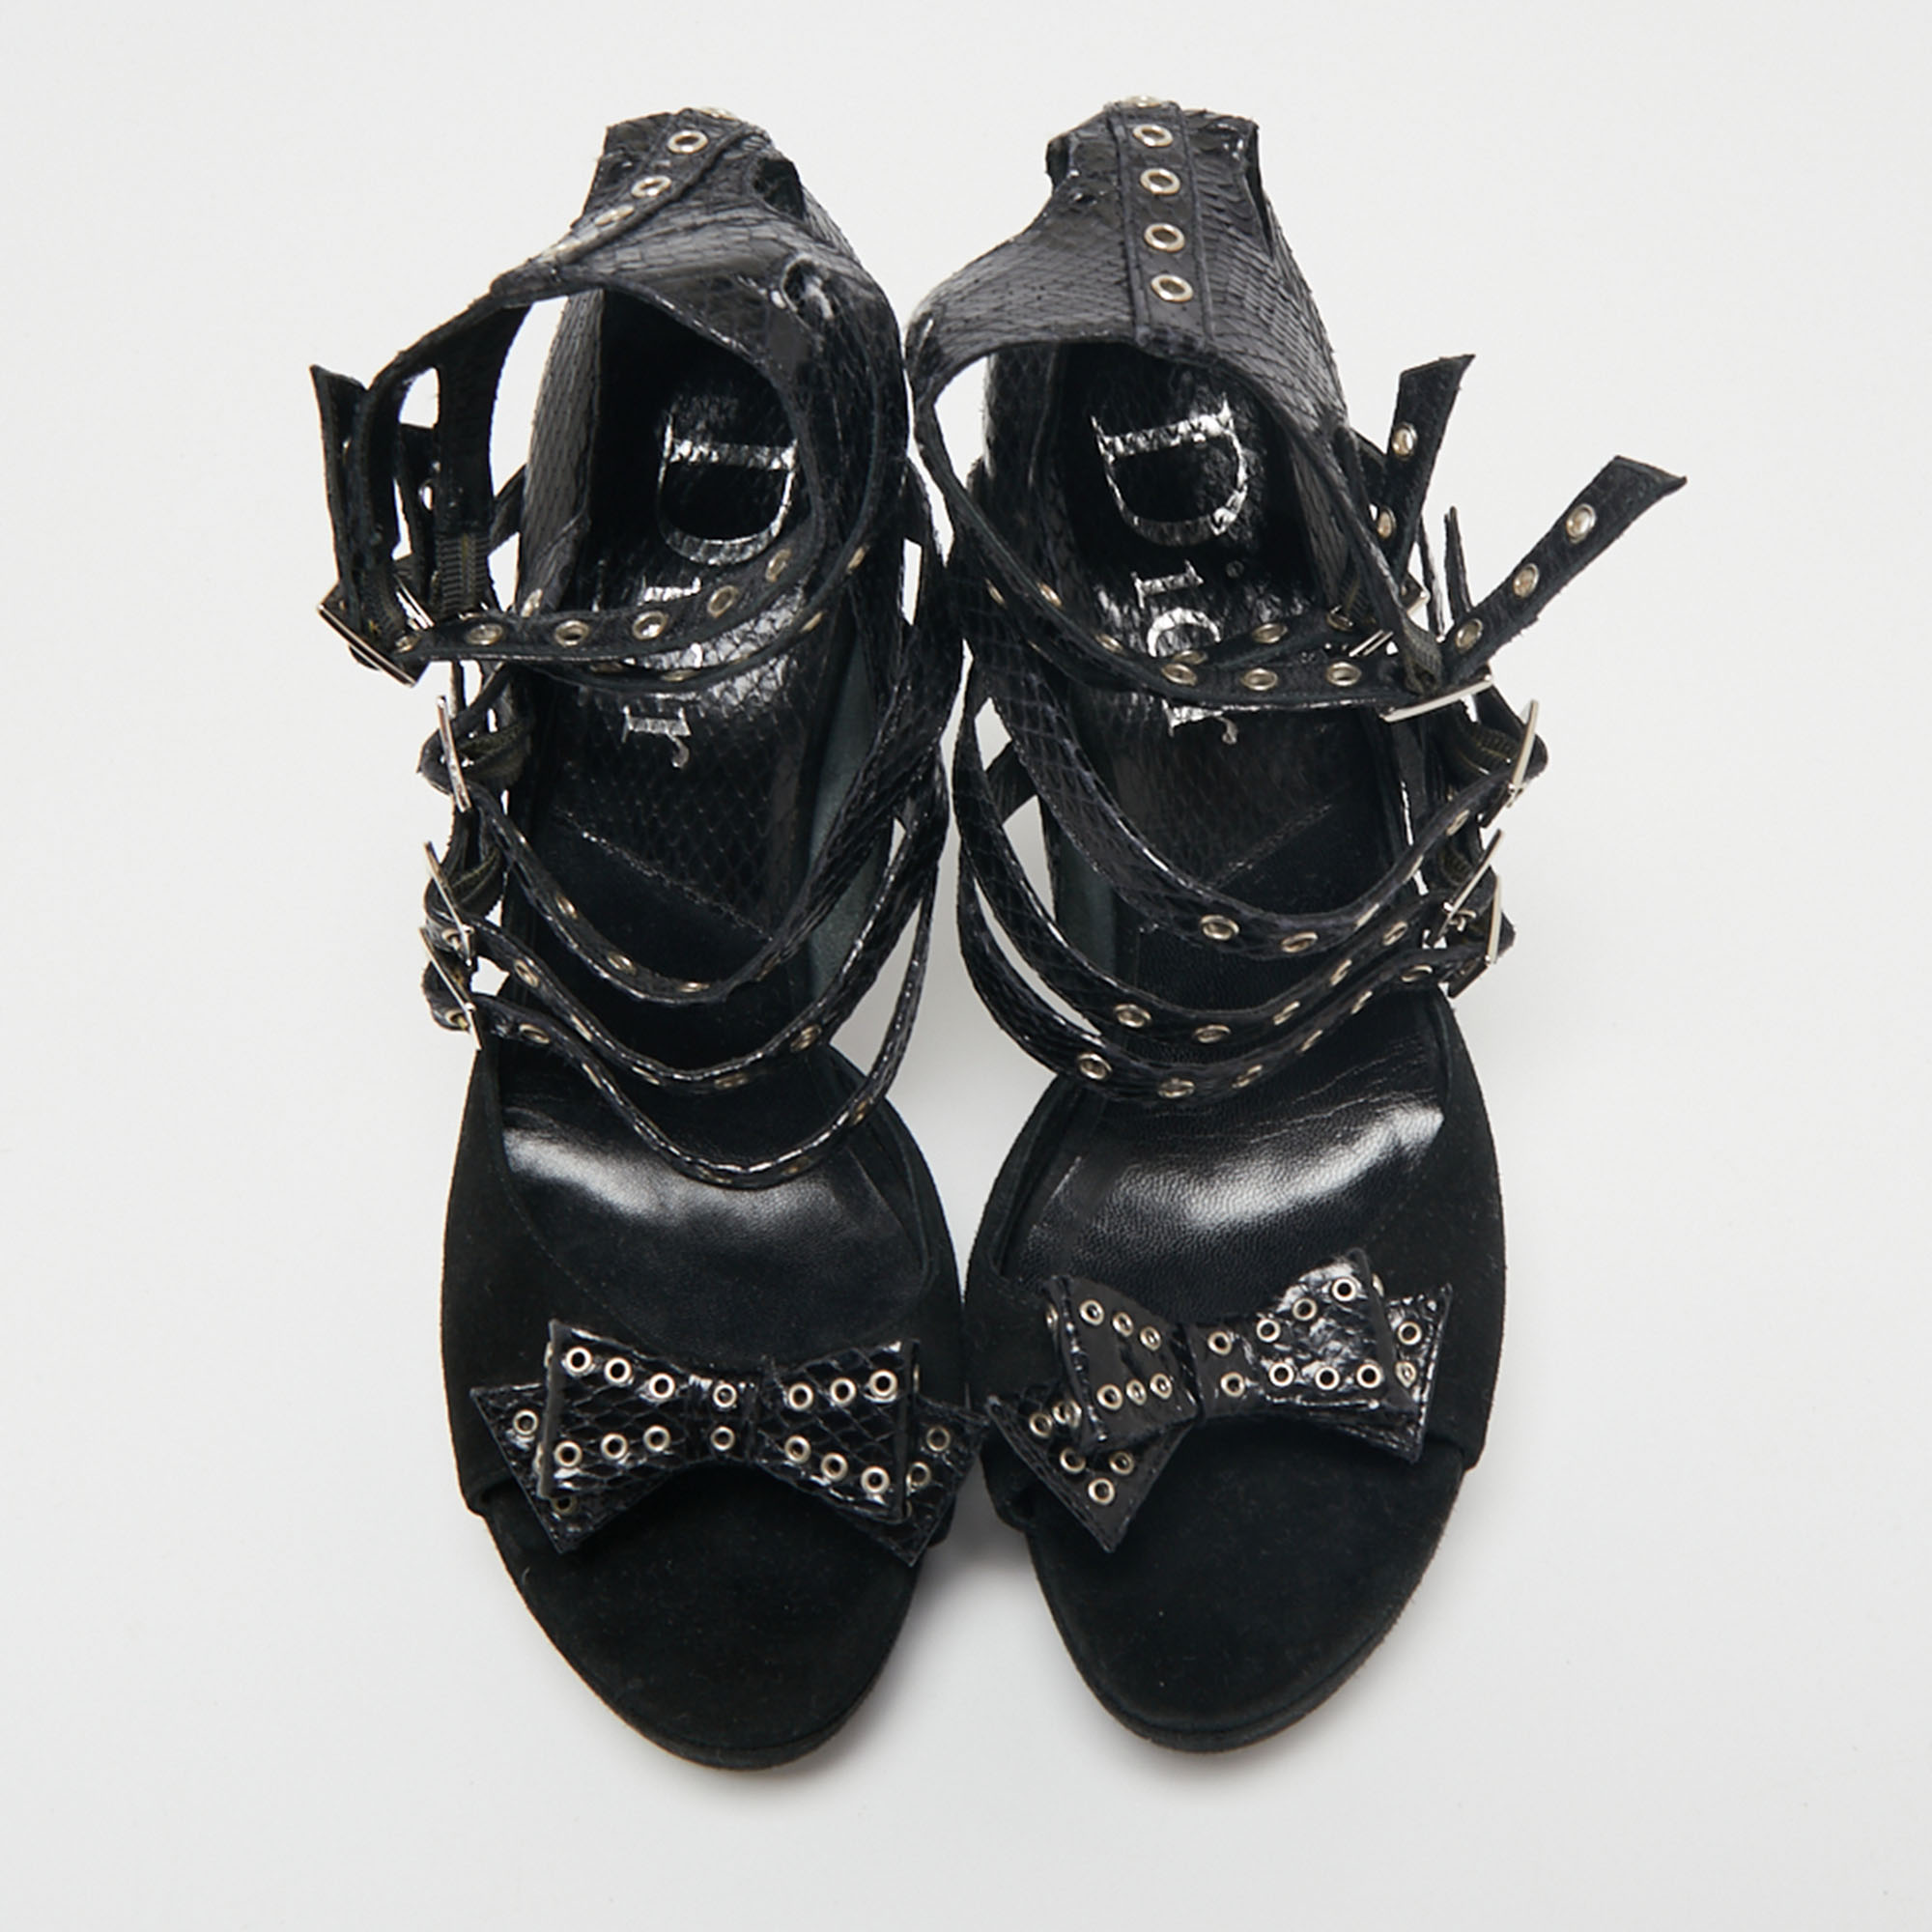 Dior Black Snakeskin And Suede Strappy Eyelet Bow Platform Sandals Size 38.5